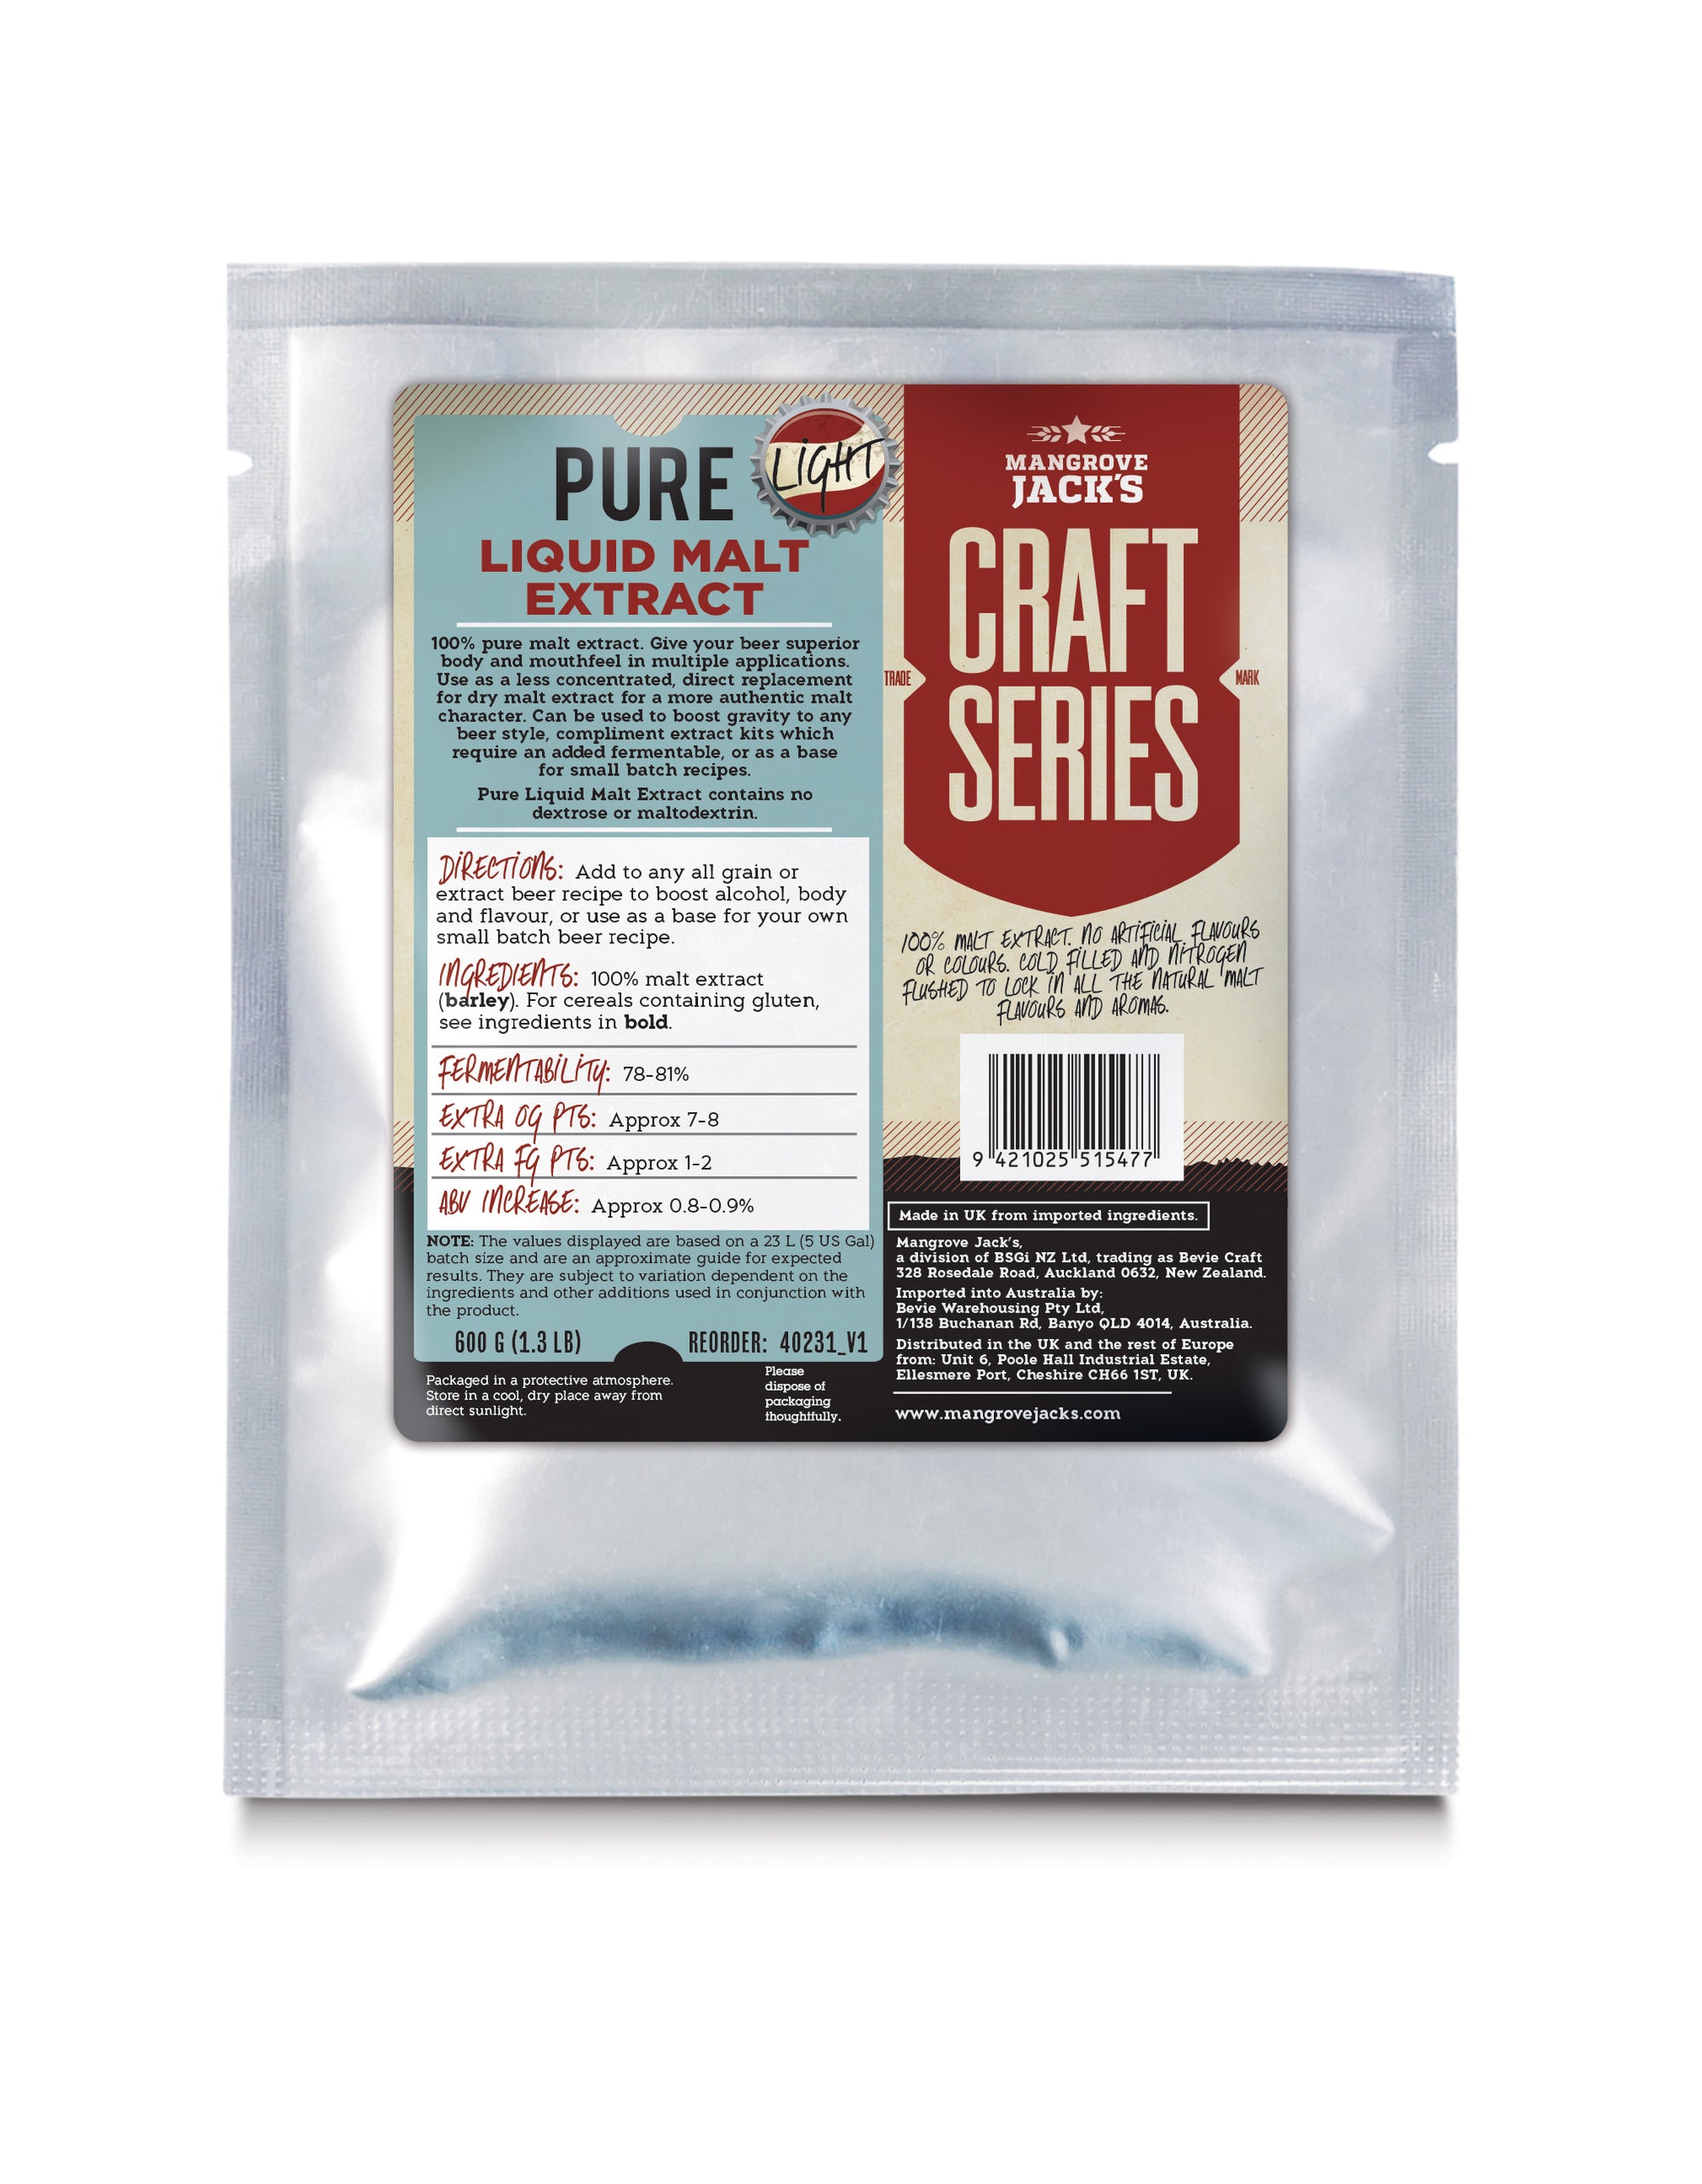 Mangrove Jacks Pure Liquid Malt Extract - Light 600g - All Things Fermented | Home Brew Shop NZ | Supplies | Equipment